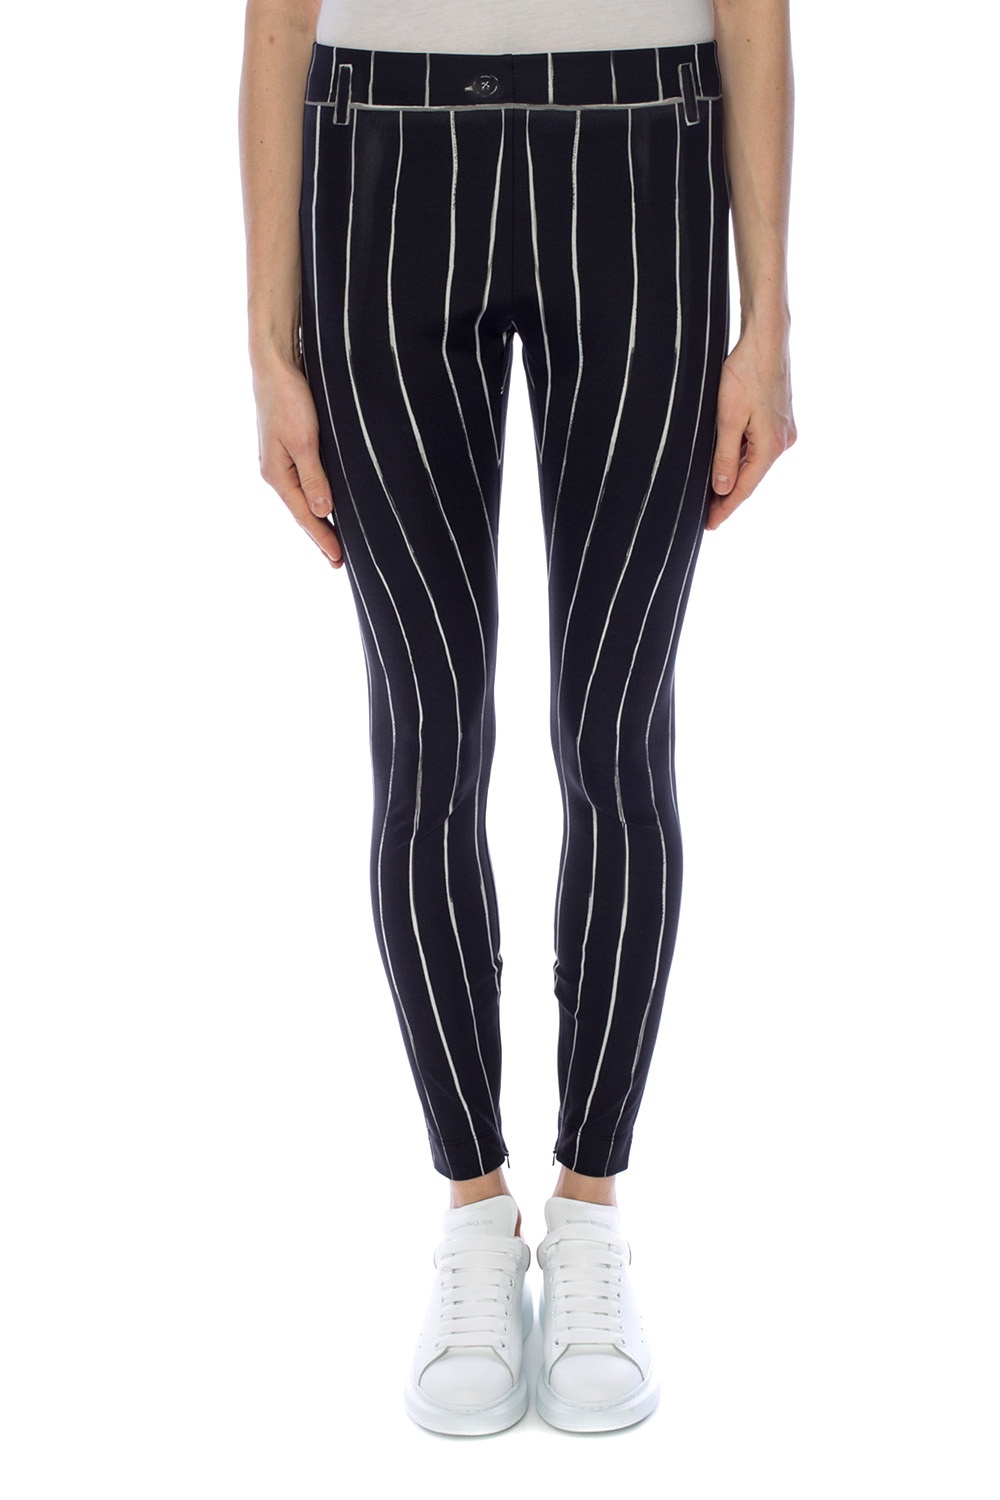 moschino striped pants